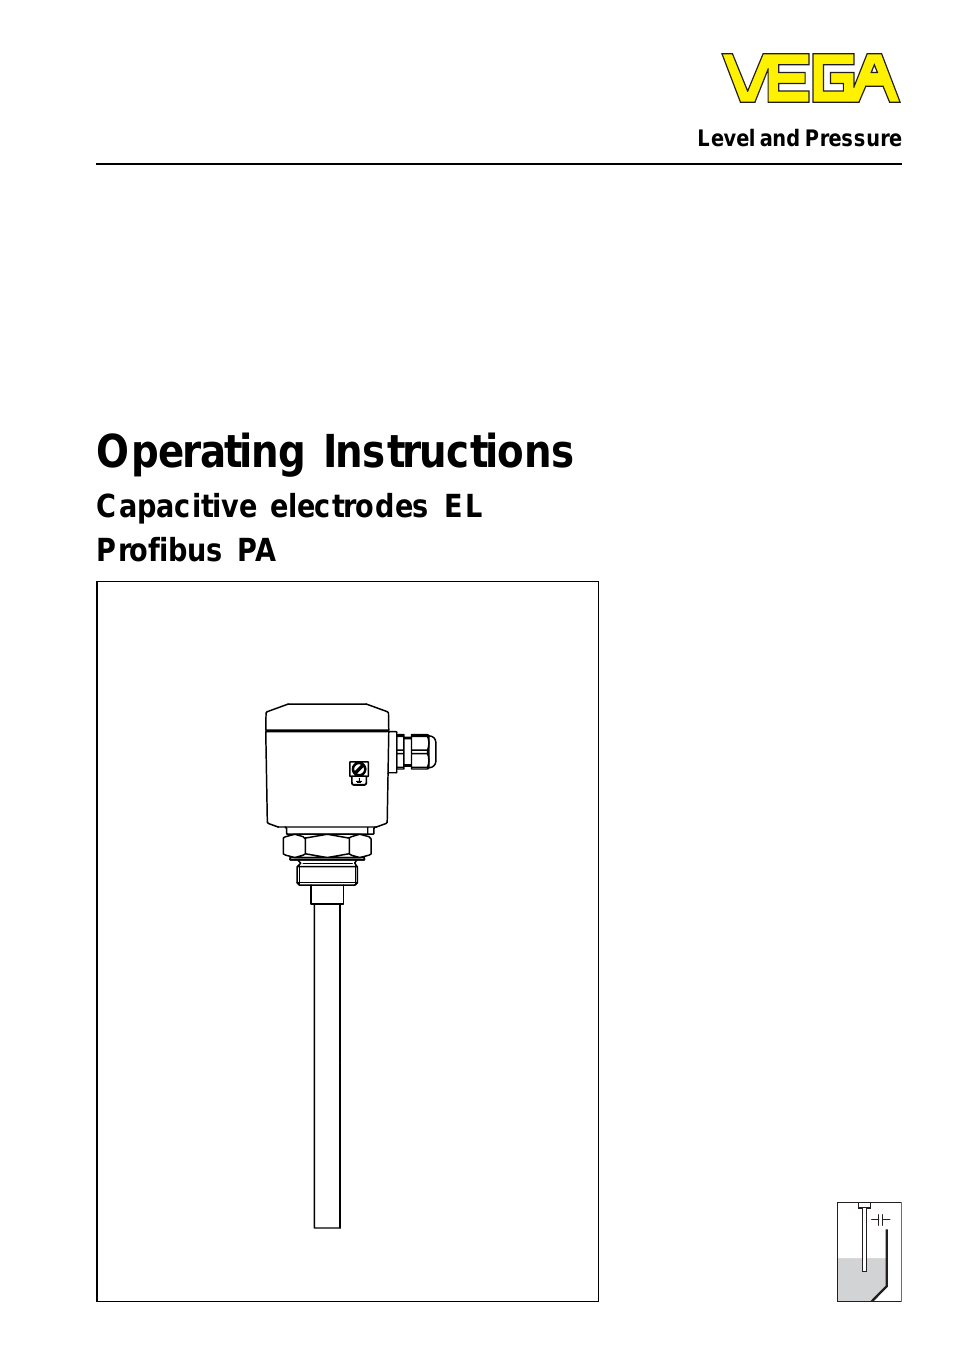 Capacitive electrodes EL Profibus PA